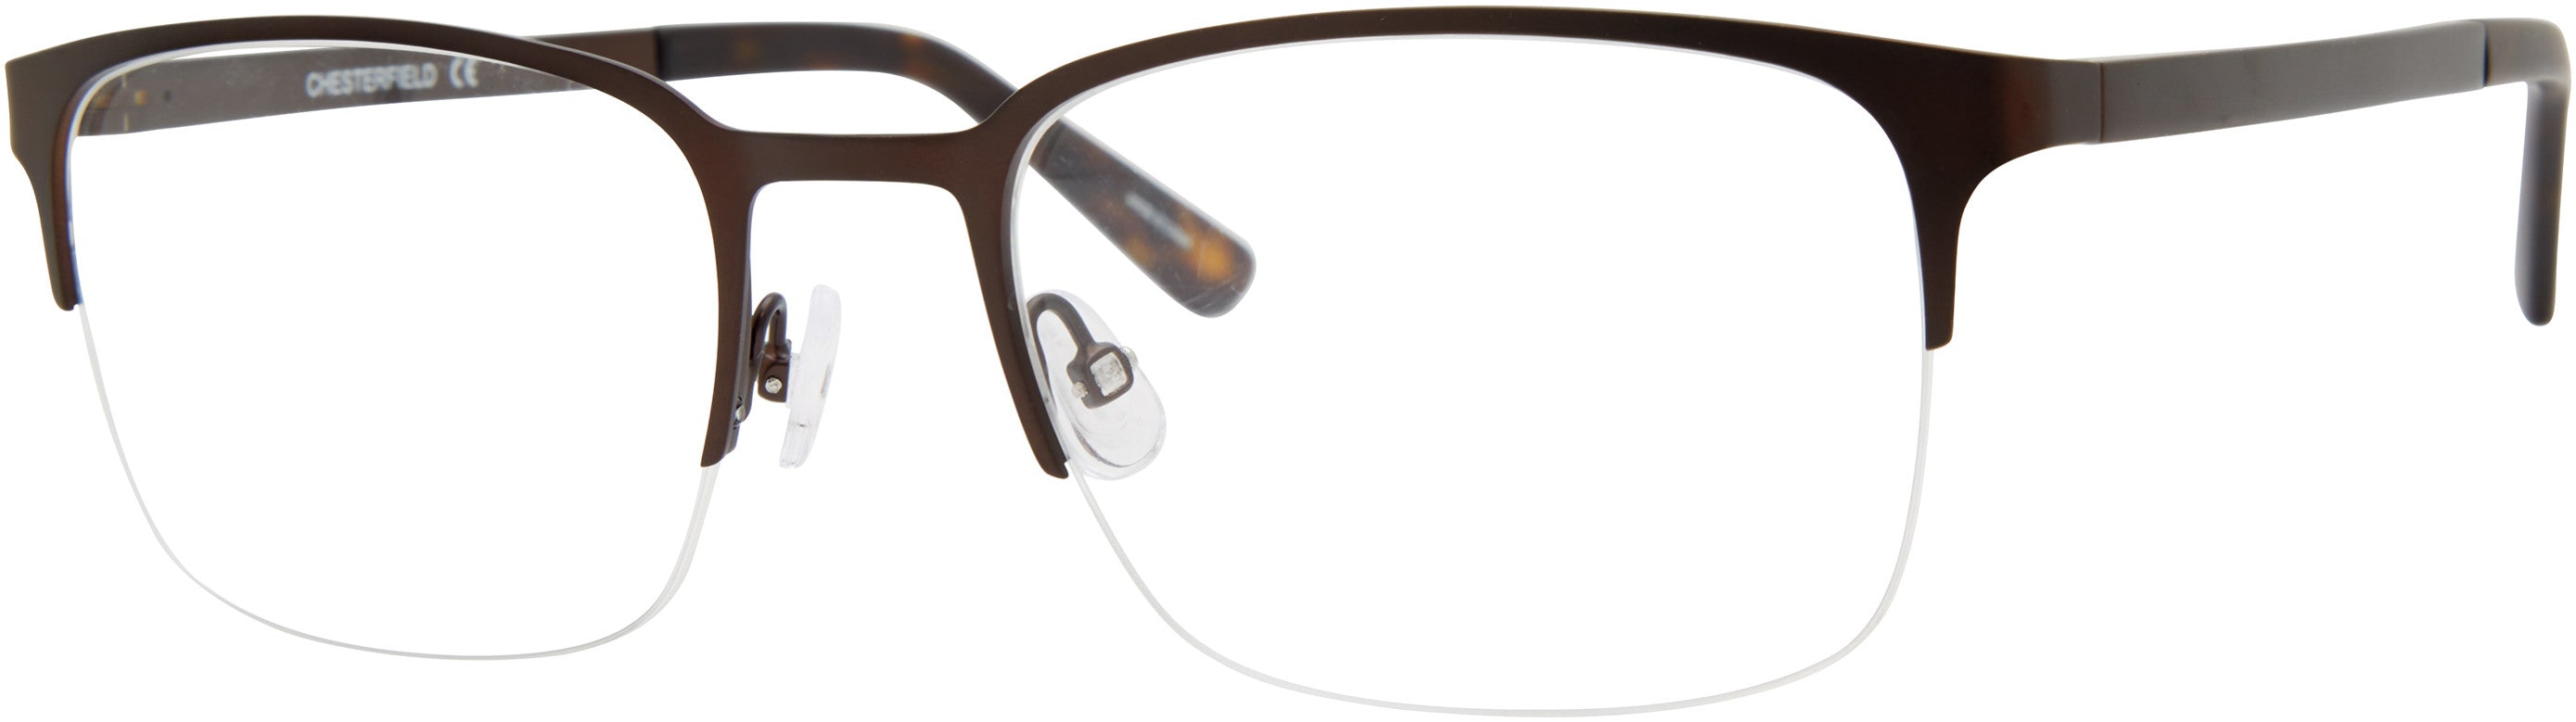  Chesterfield 86XL Rectangular Eyeglasses 0R0Z-0R0Z  Dark Brown (00 Demo Lens)